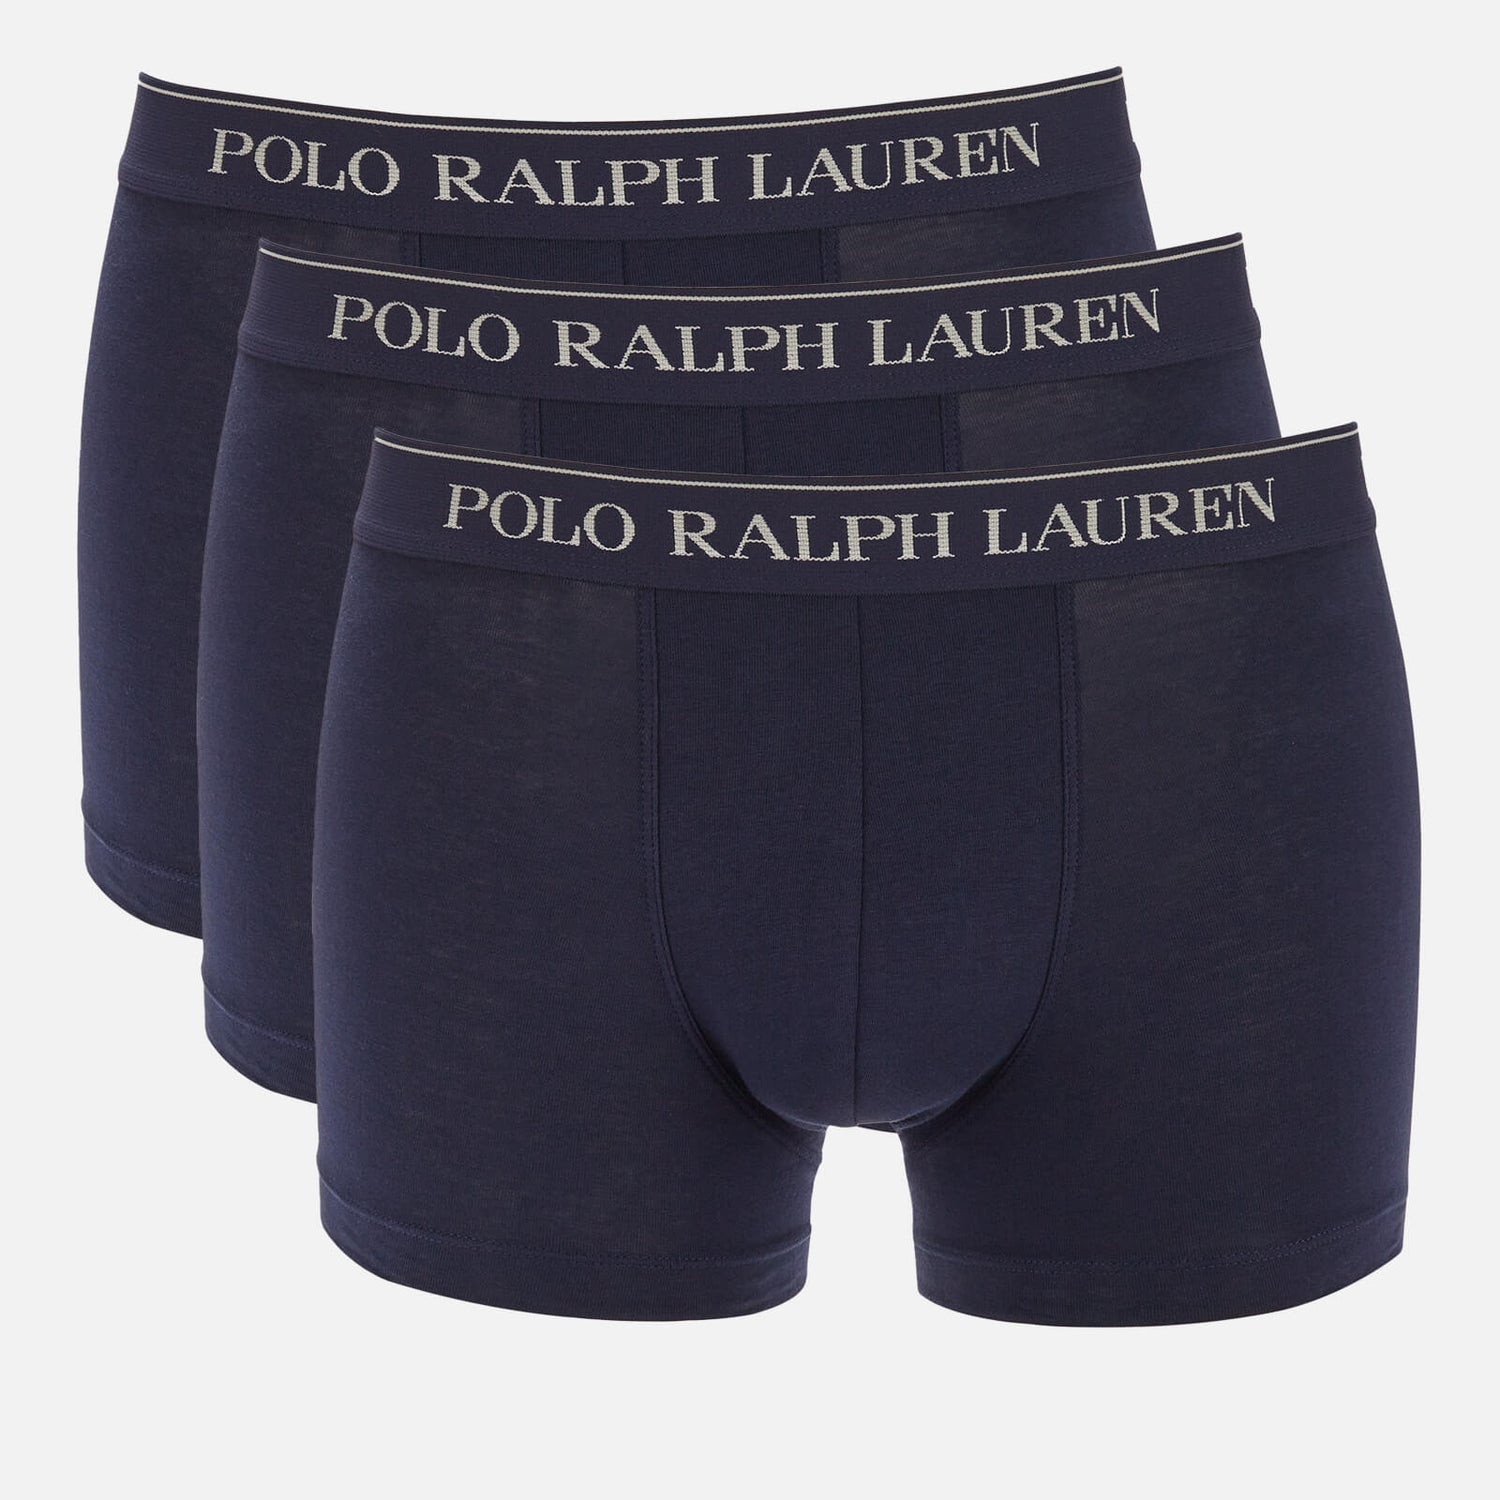 Polo Ralph Lauren Men's 3-Pack Trunk Boxers - Cruise Navy - S